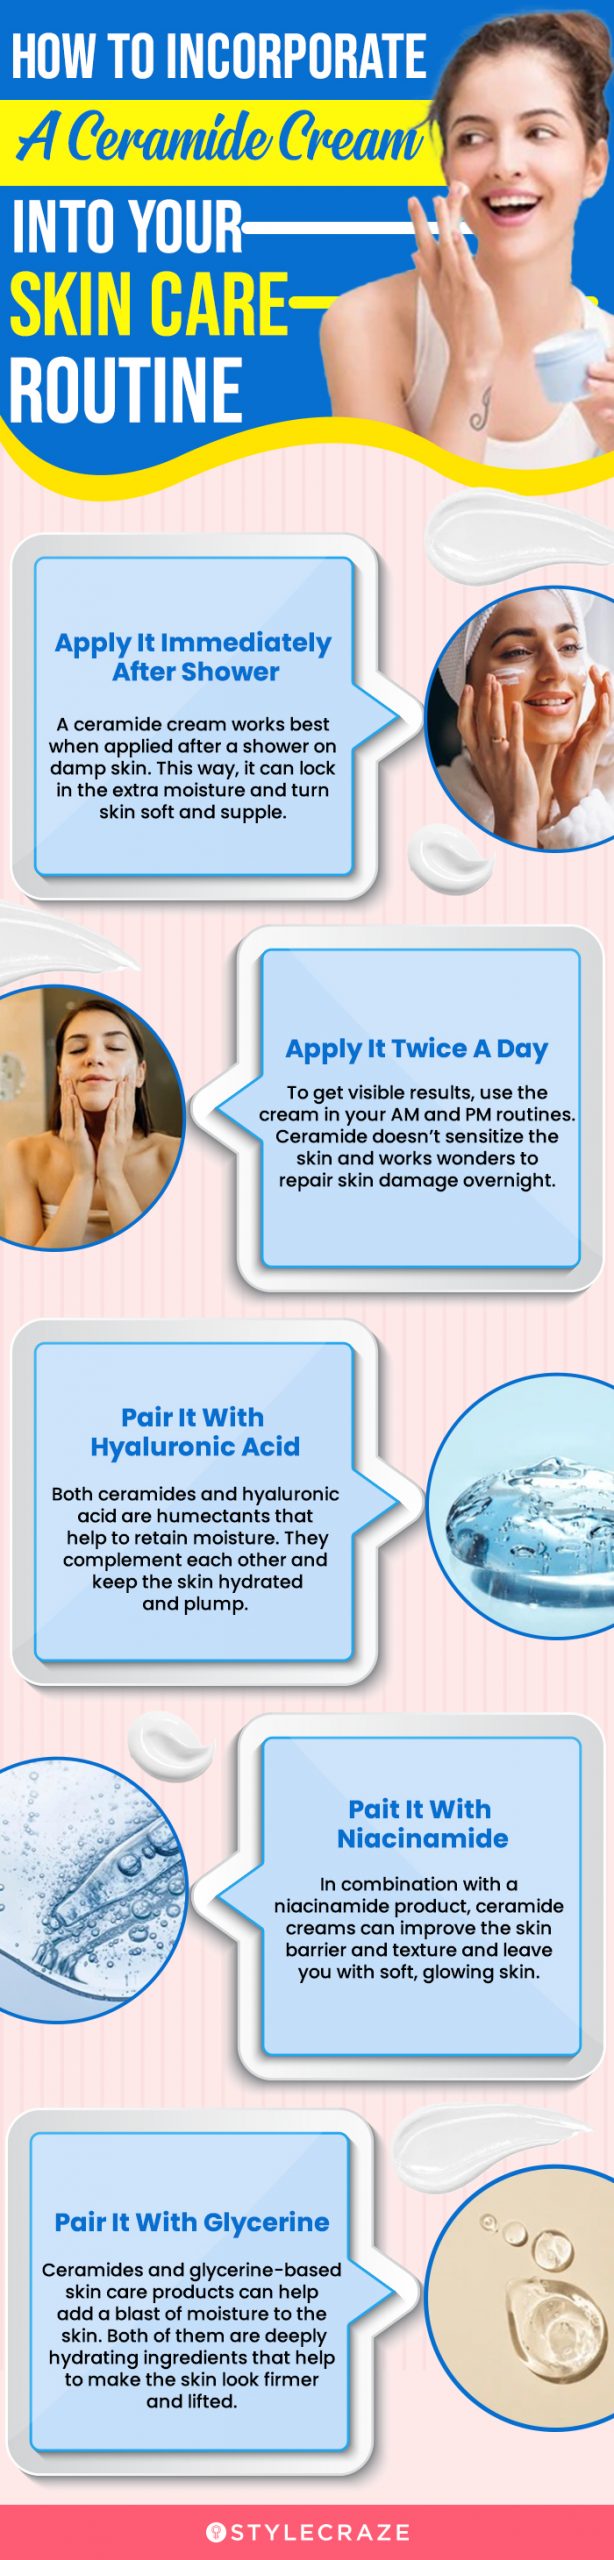 How To Incorporate Ceramide Cream In The Skincare Routine (infographic)